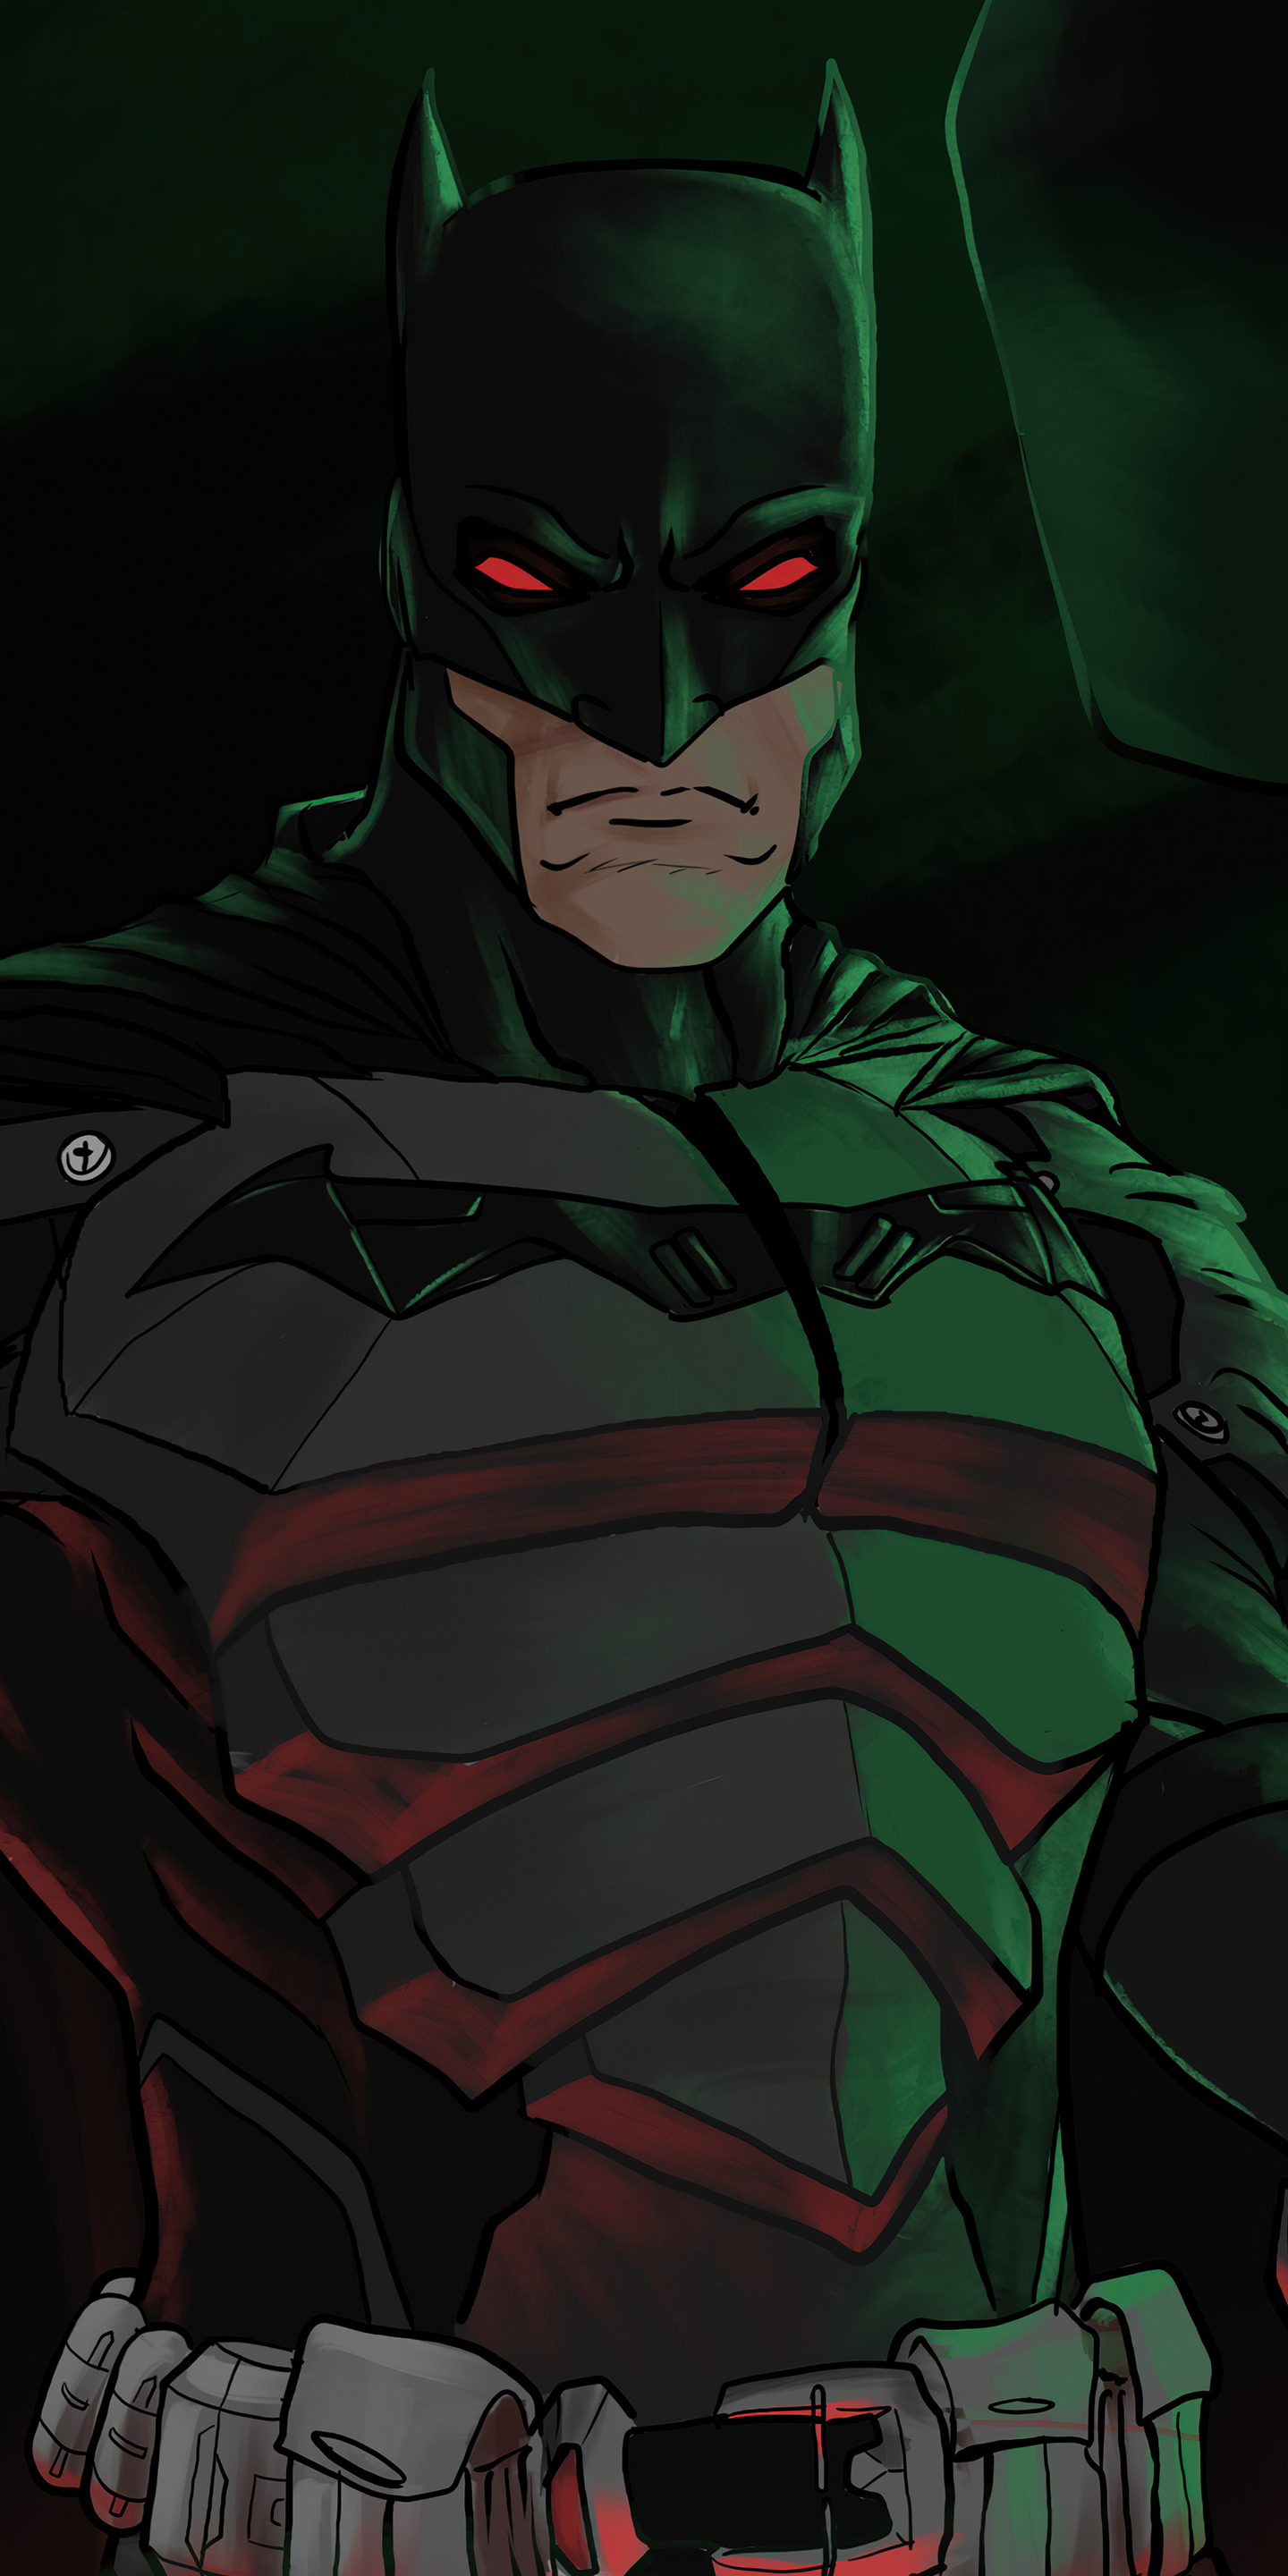 Descarga gratuita de fondo de pantalla para móvil de Historietas, The Batman, Superhéroe, Dc Comics, Hombre Murciélago.